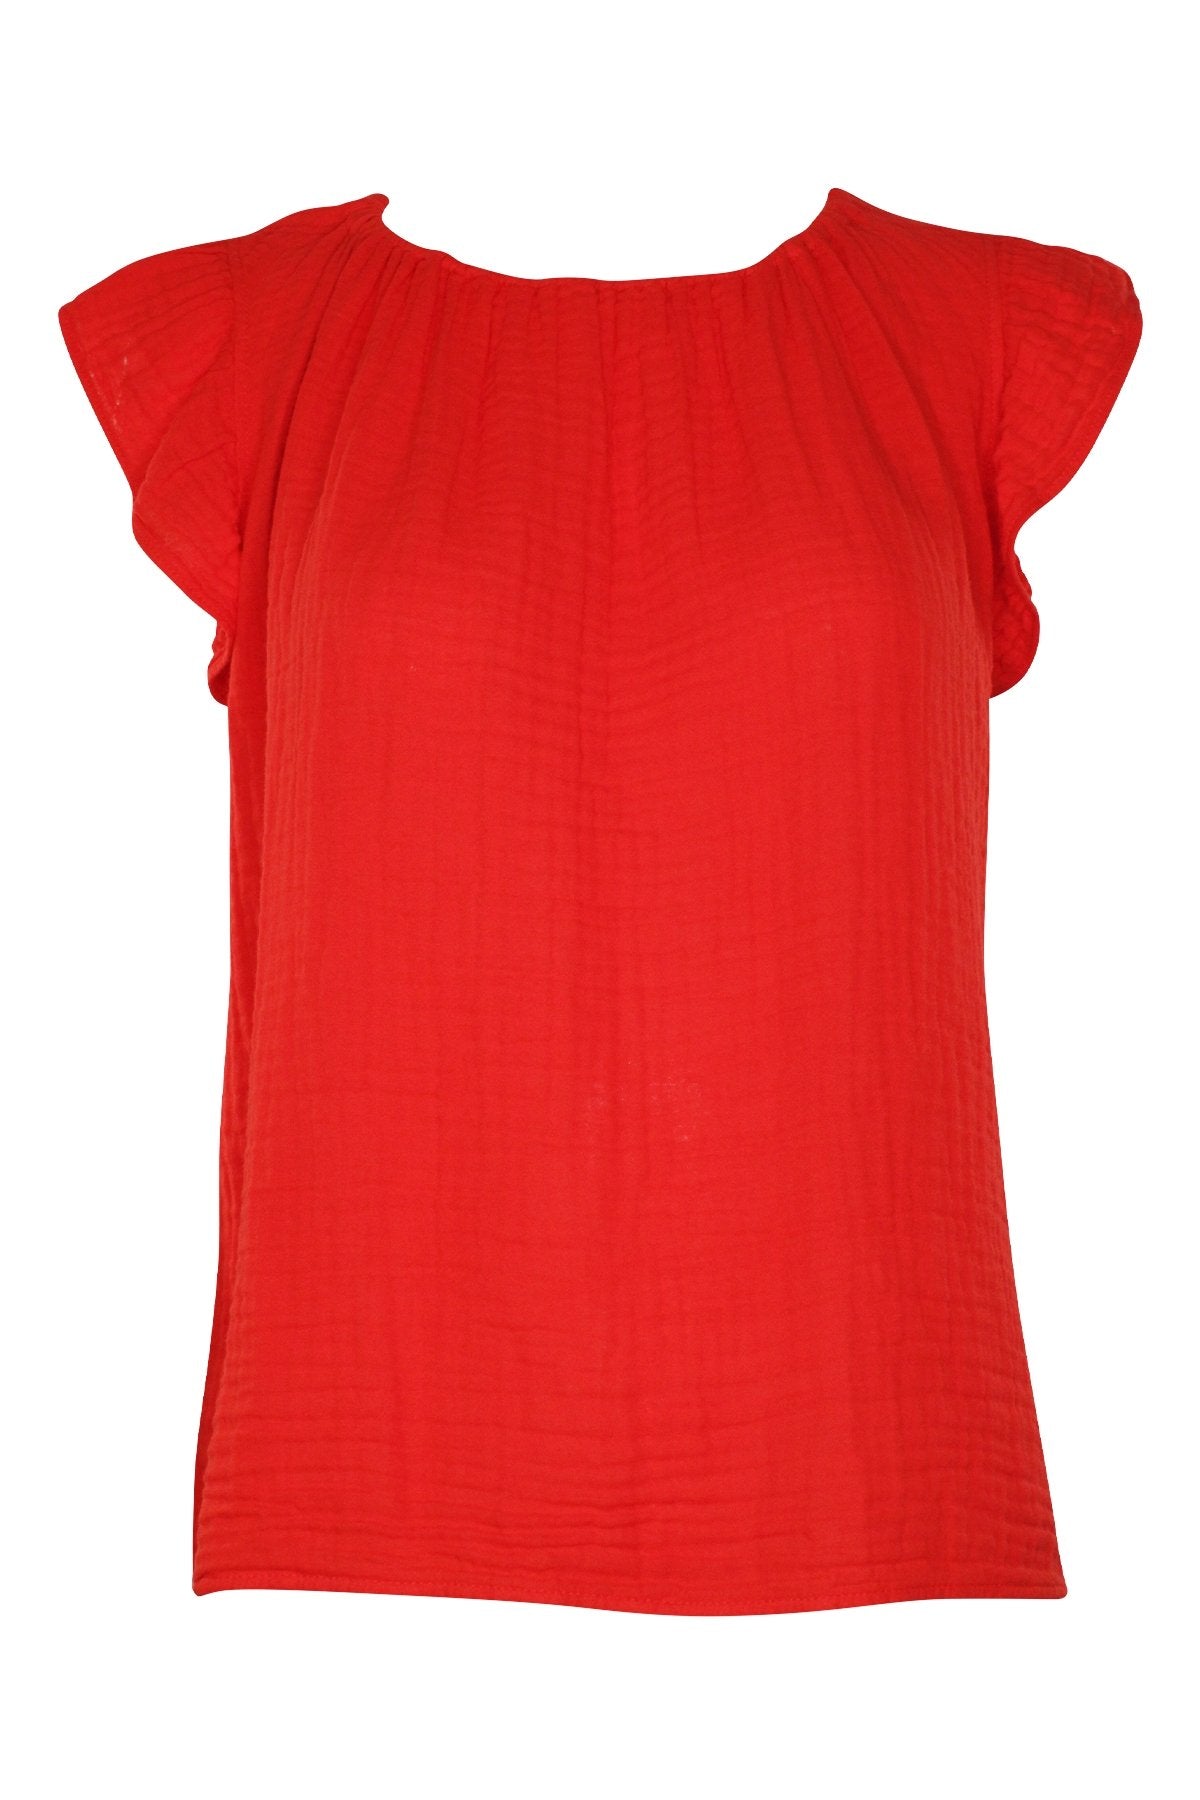 Kaia Short Sleeve Top in Cardinal - shop-olivia.com